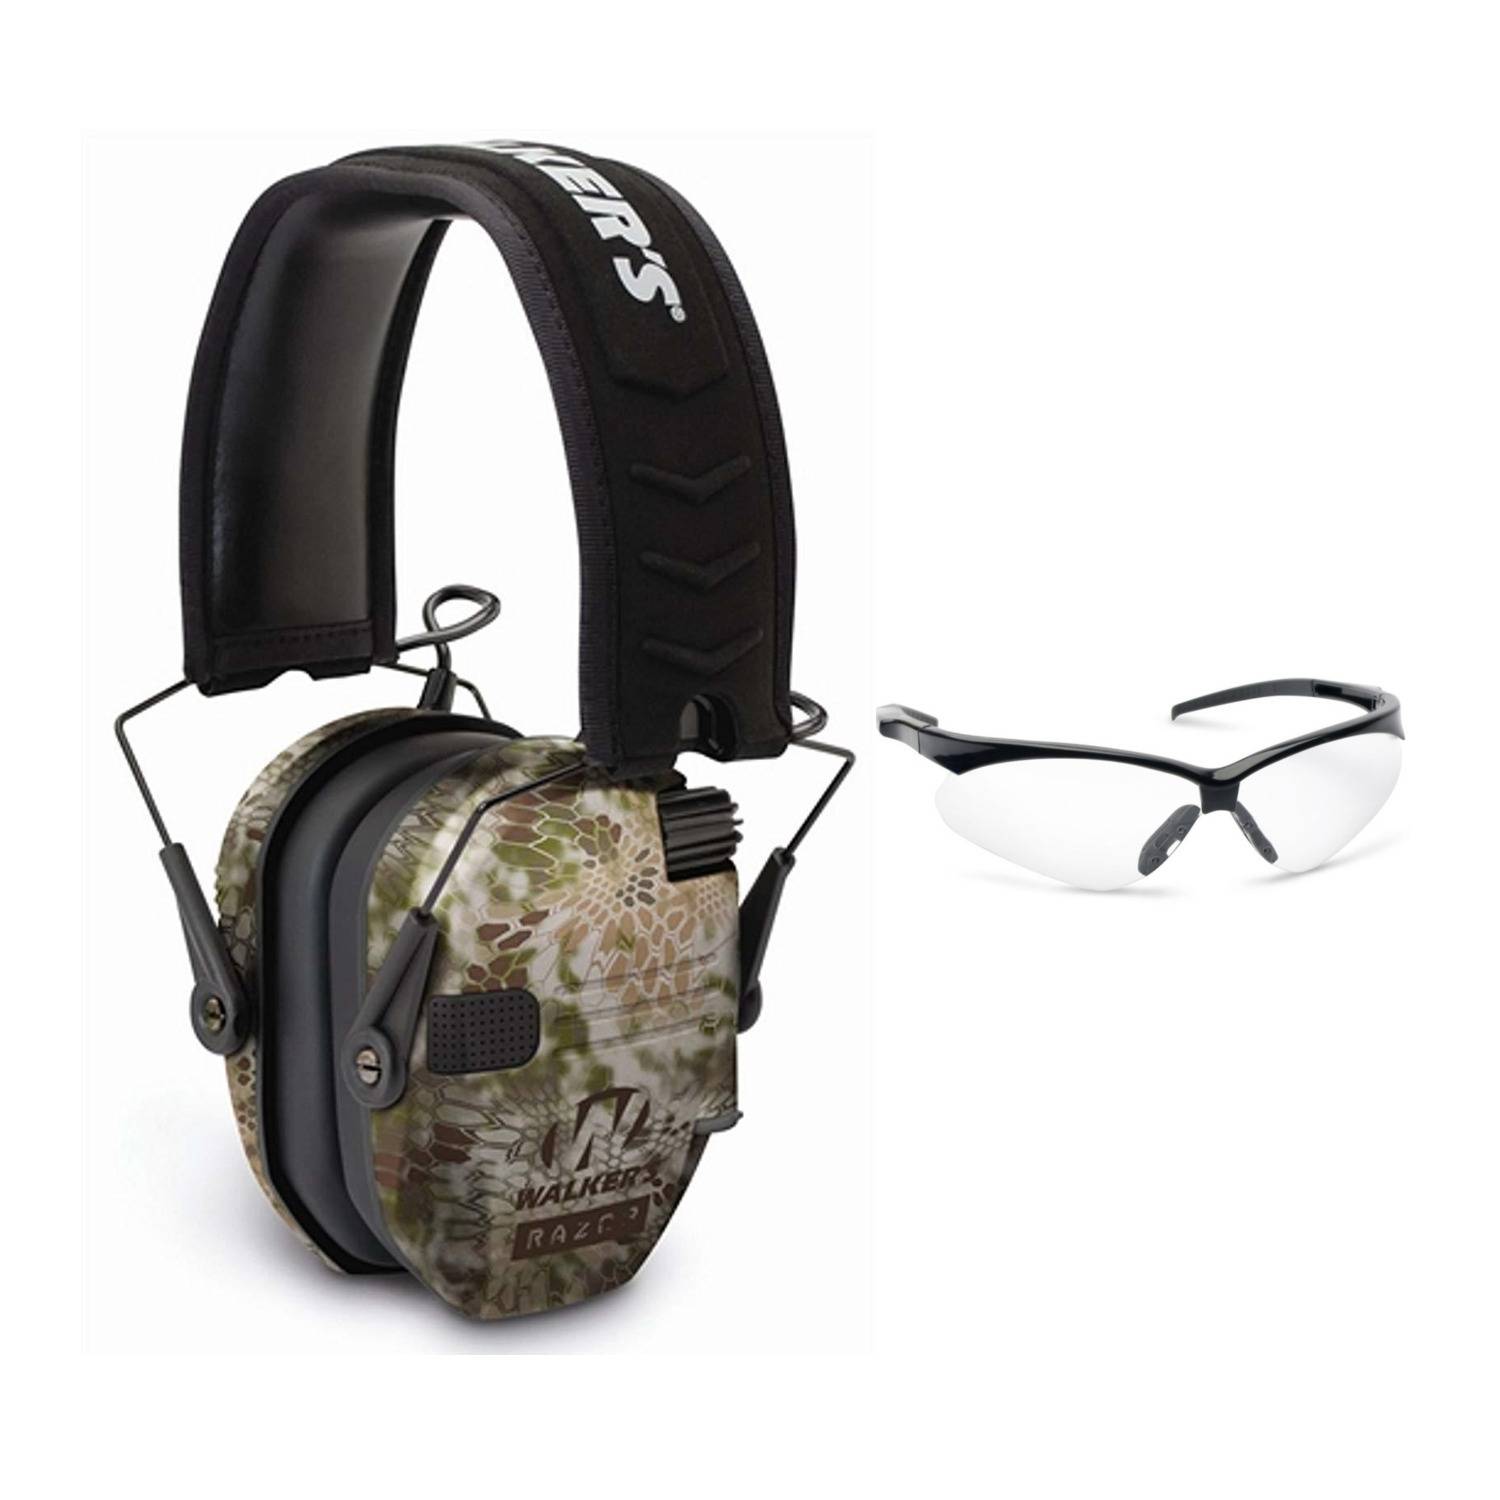 Walker's Razor Slim Electronic Hearing Muffs (Camo) and Shooting Glasses Kit